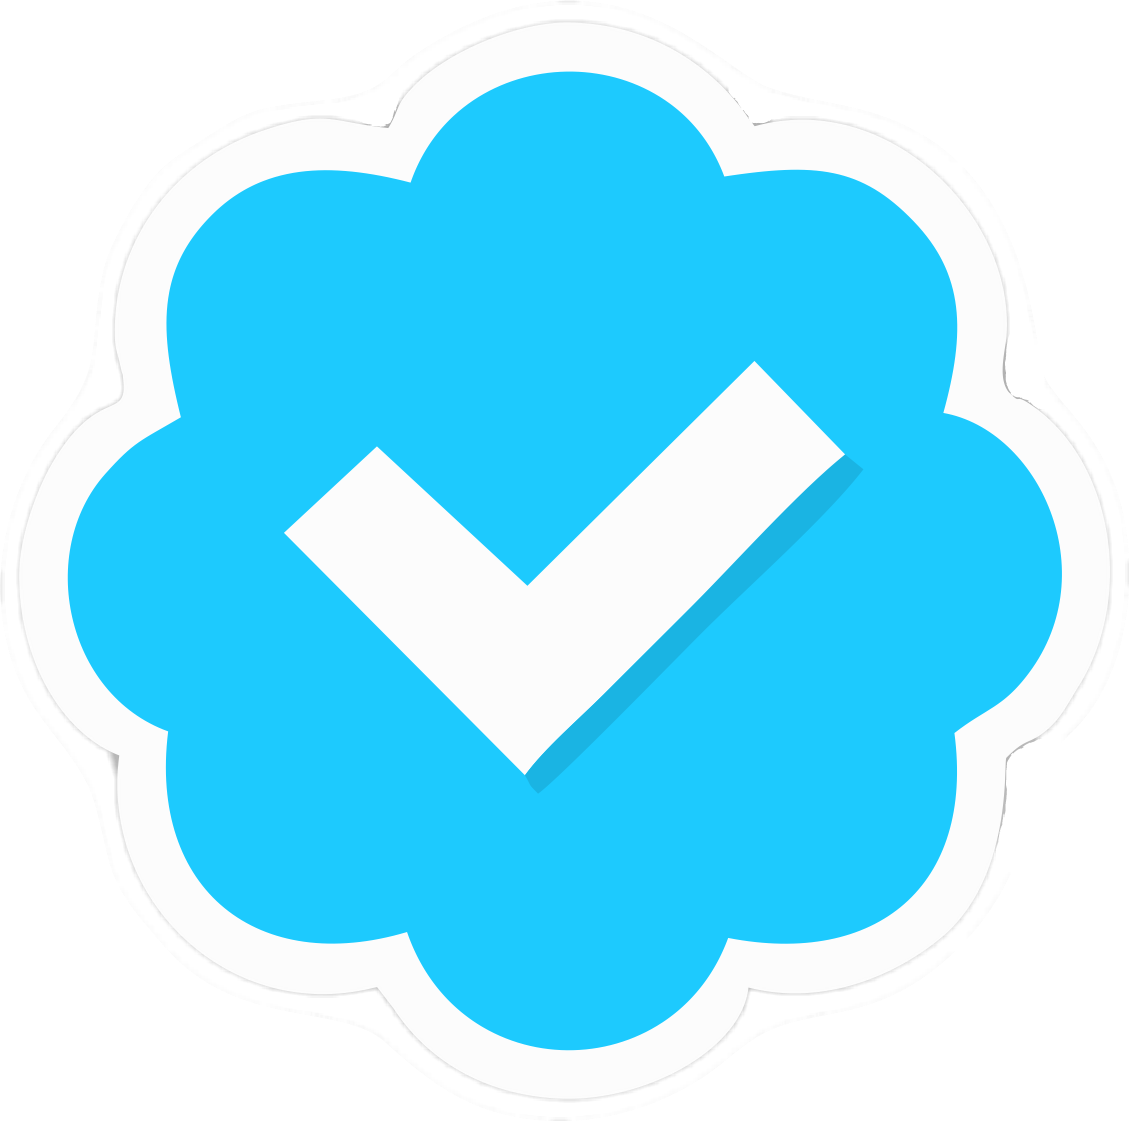 Instagram verificado instagram verified verify verifica... - 1129 x 1121 png 121kB